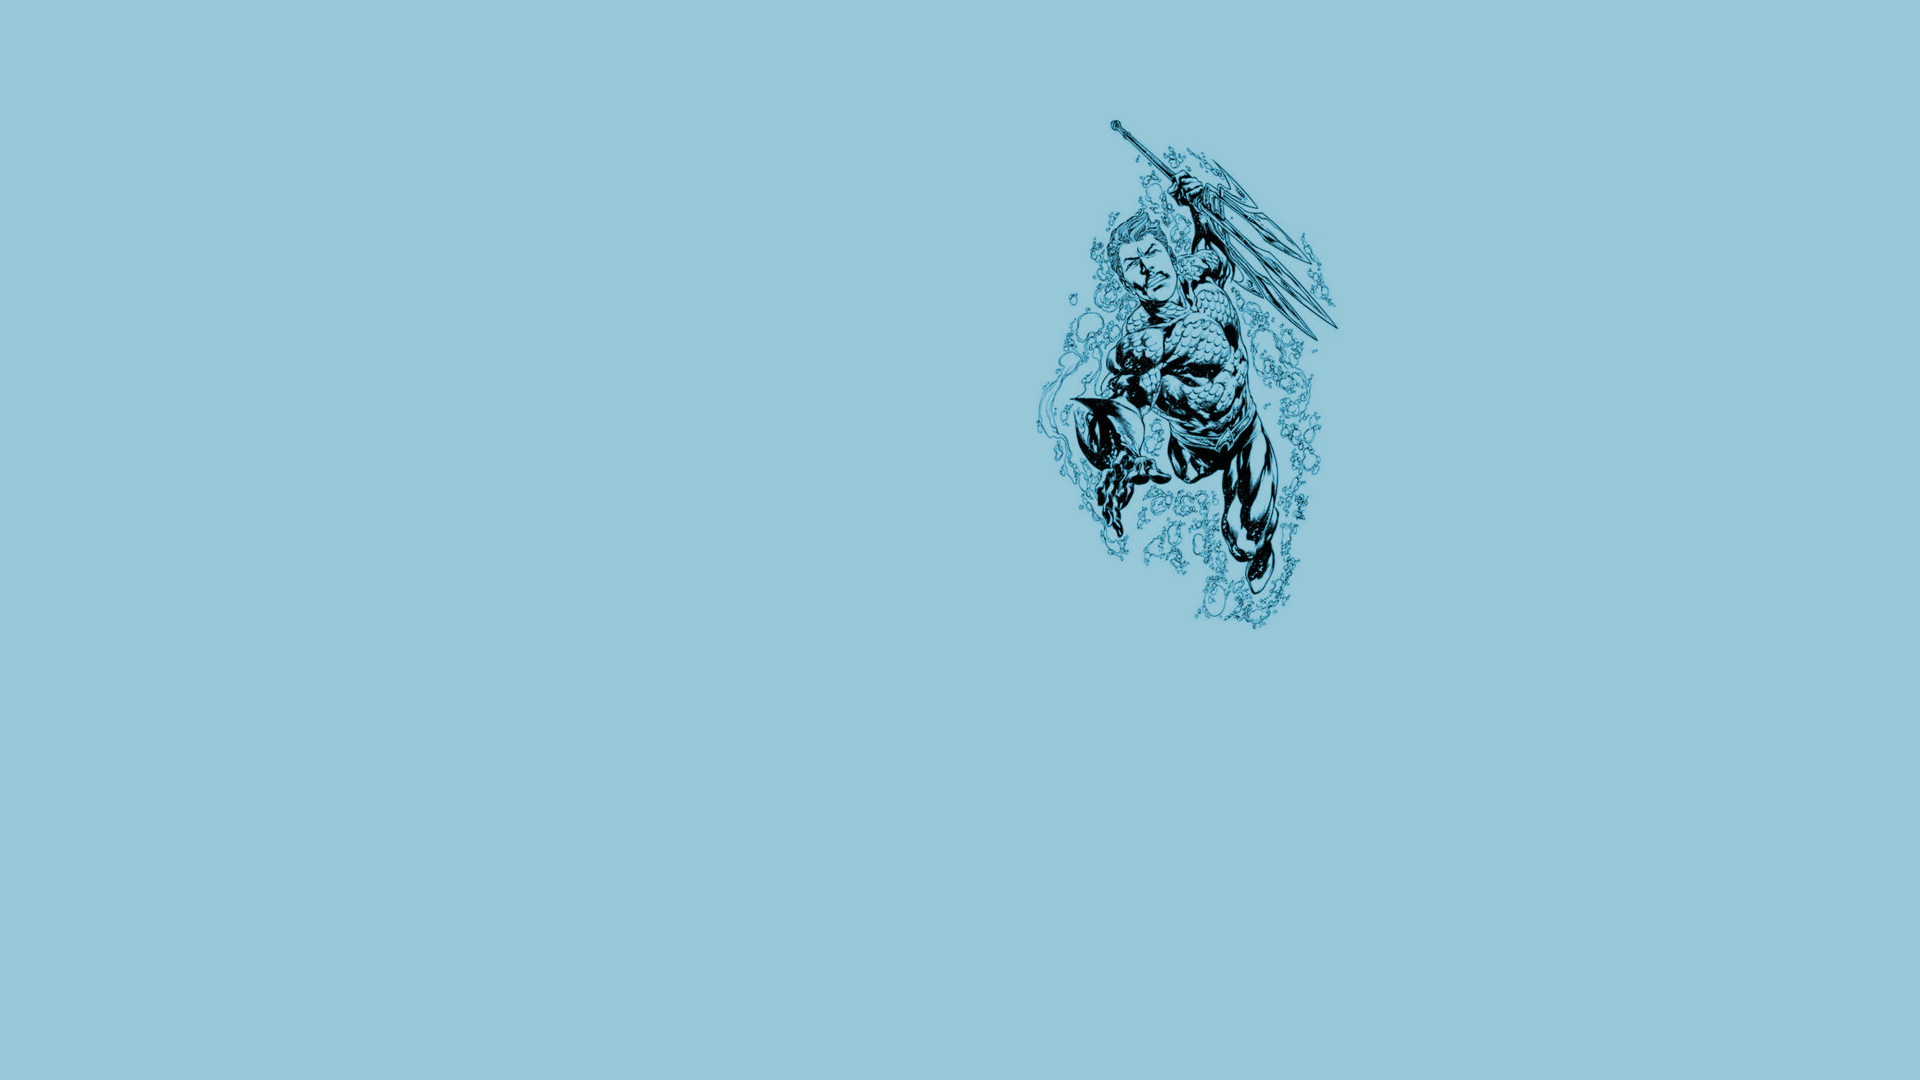 Aquaman Computer Wallpapers, Desktop Backgrounds | 1920x1080 | ID ...